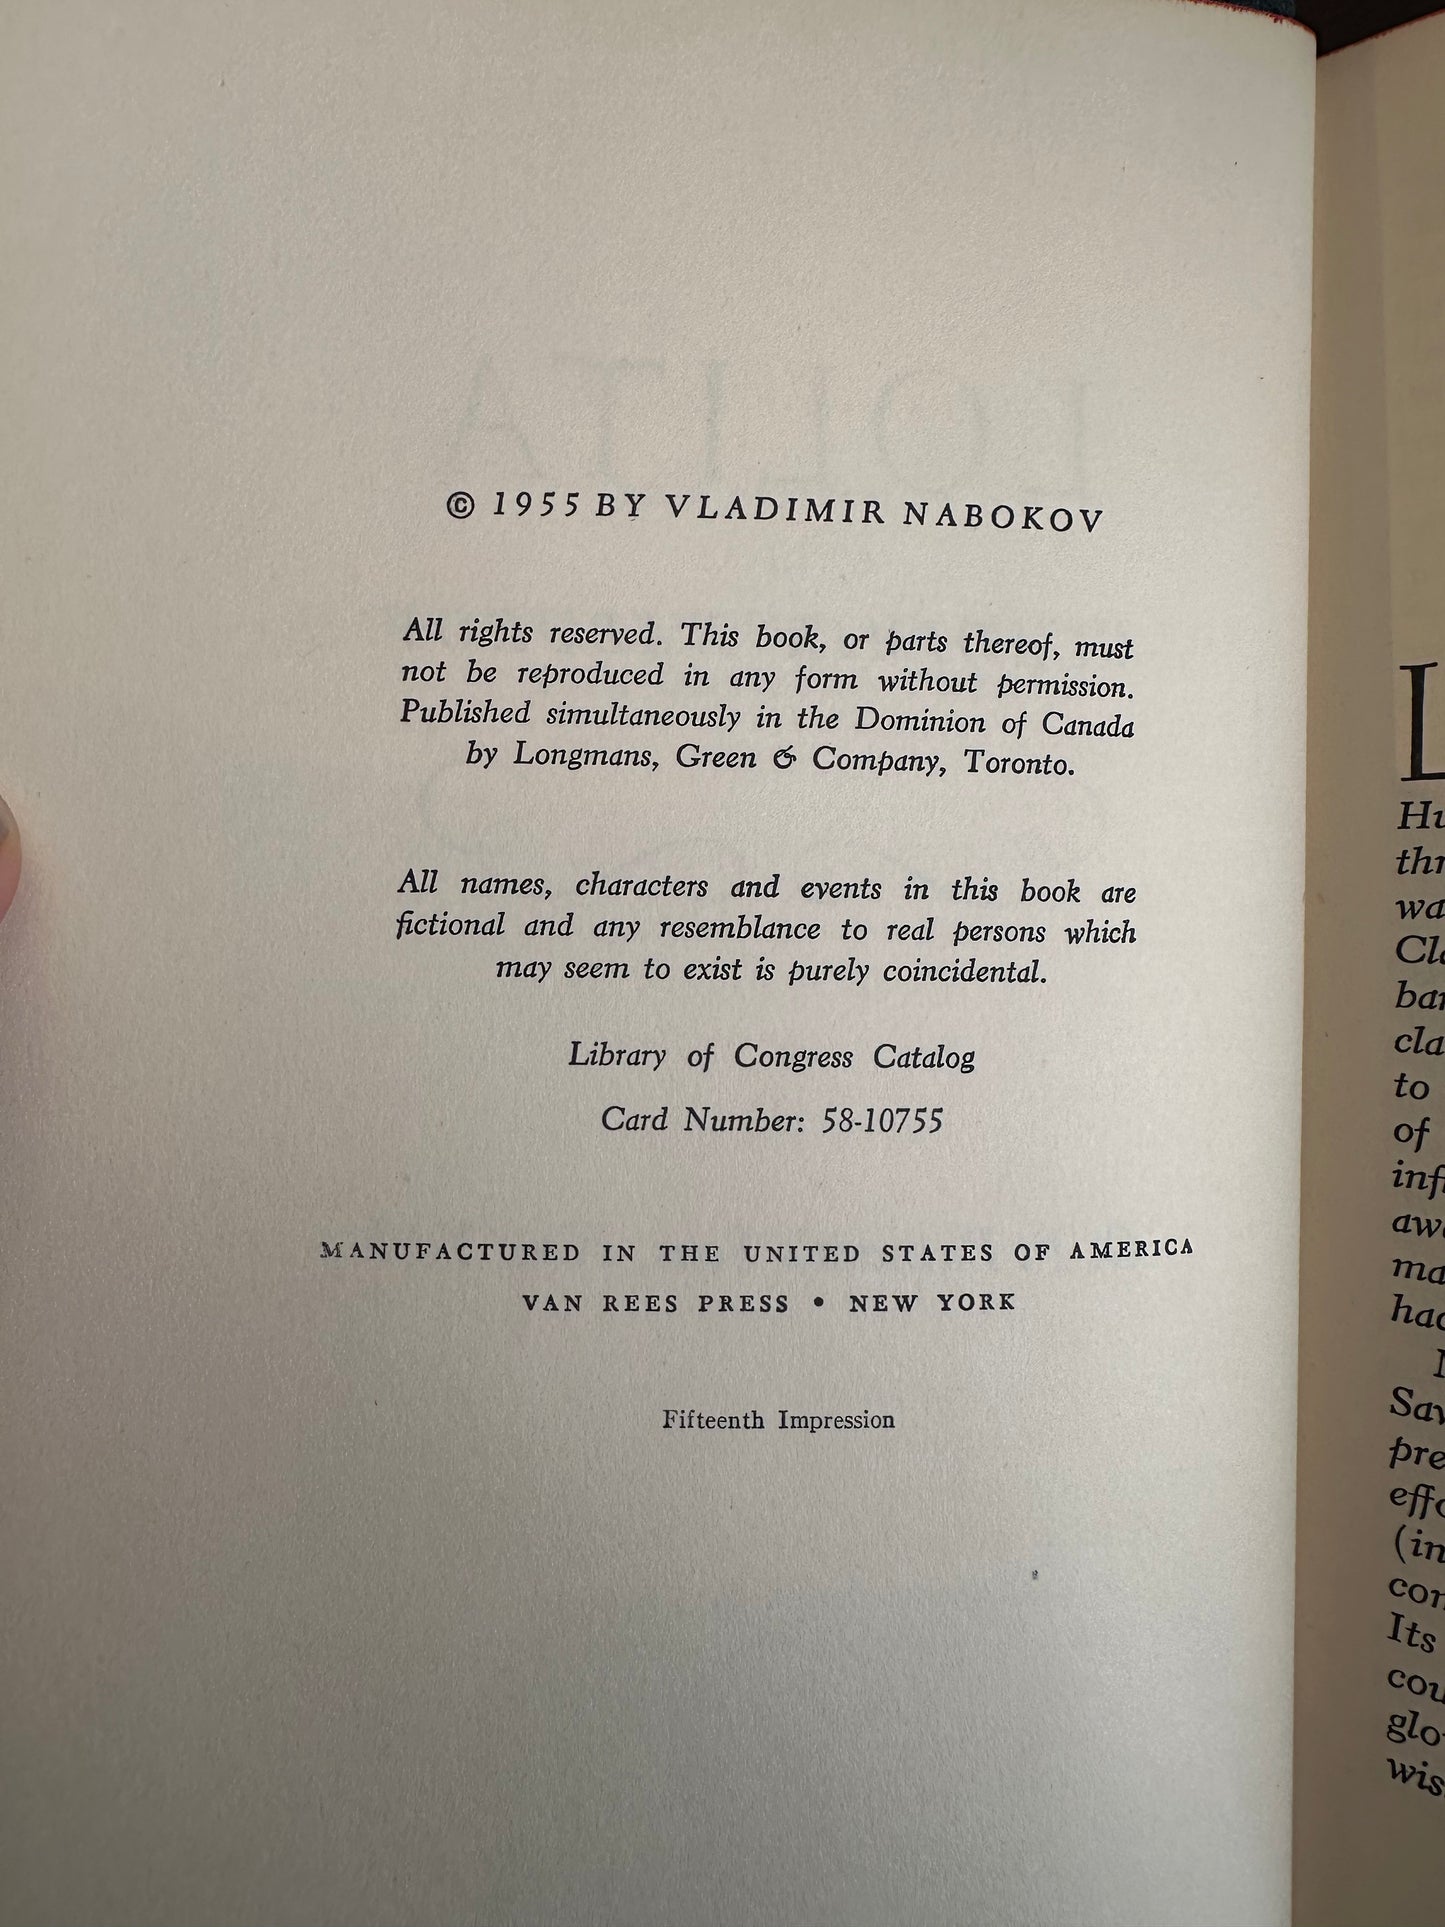 Lolita by Vladimir Nabokov (First Edition)